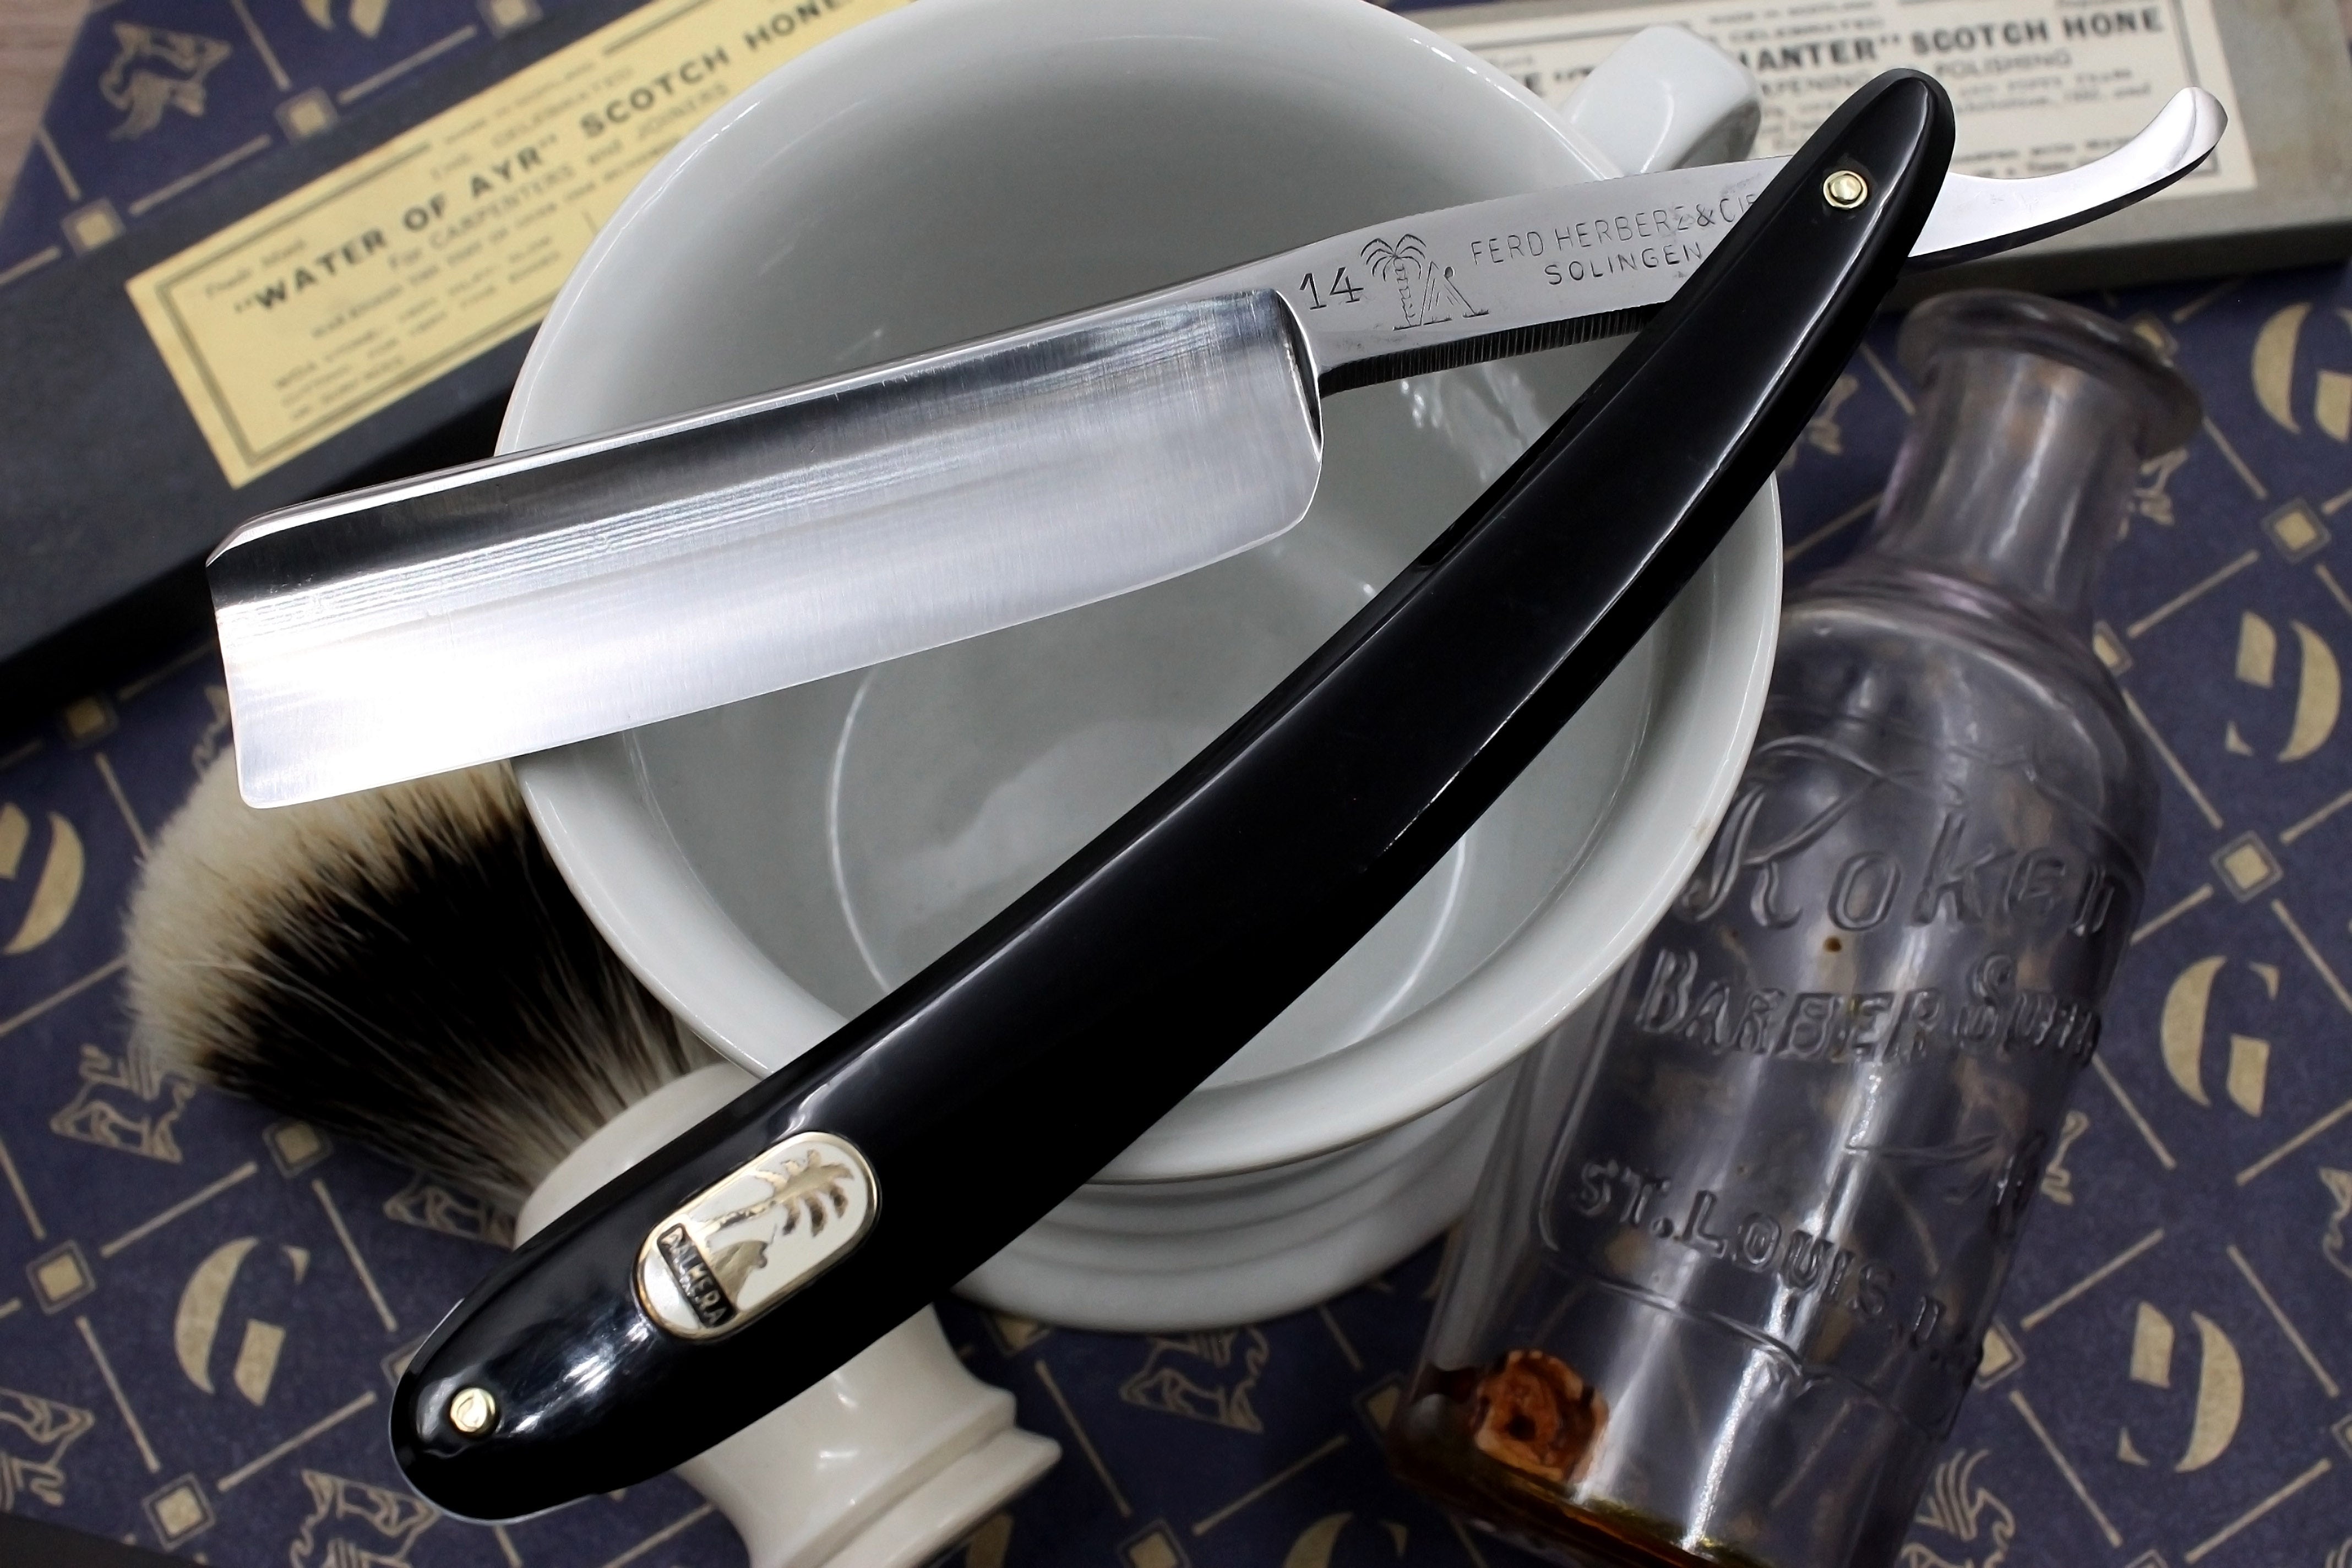 Ferdinand Herbertz & Cie PALMERA No. 14 - 7/8 Full Hollow Blade - Excellent Restored Vintage Solingen Straight Razor - Shave Ready